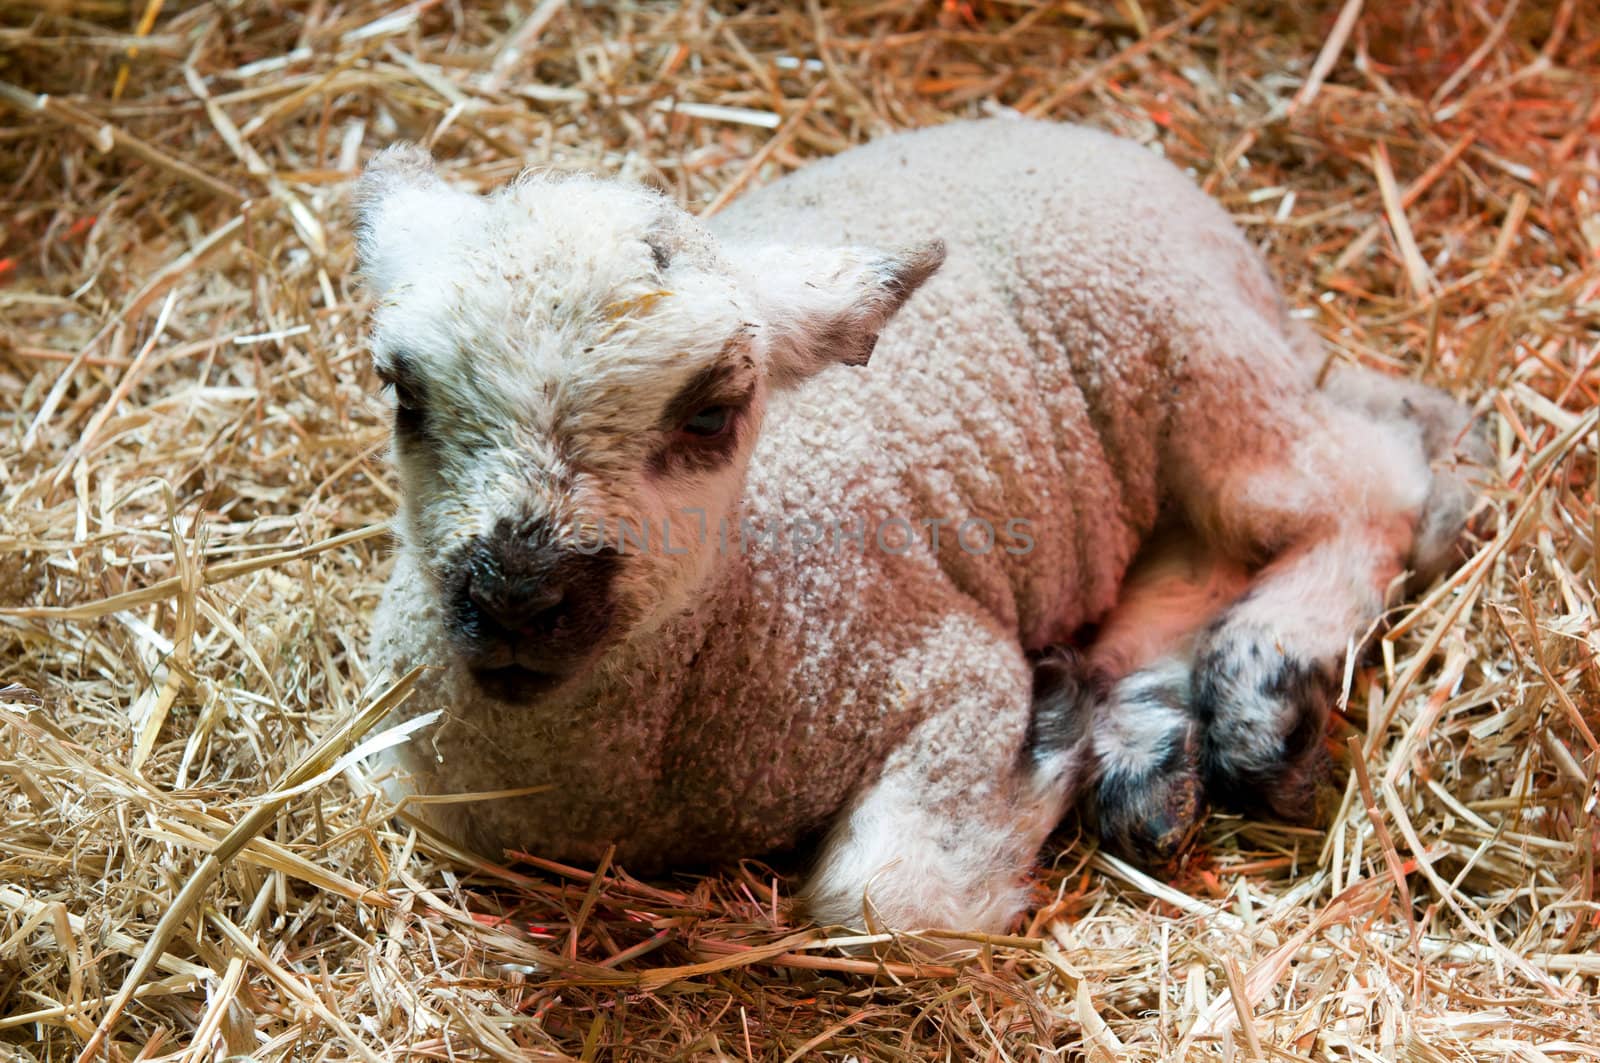 newborn lamb laying in hay (natural lighting inside a barn)